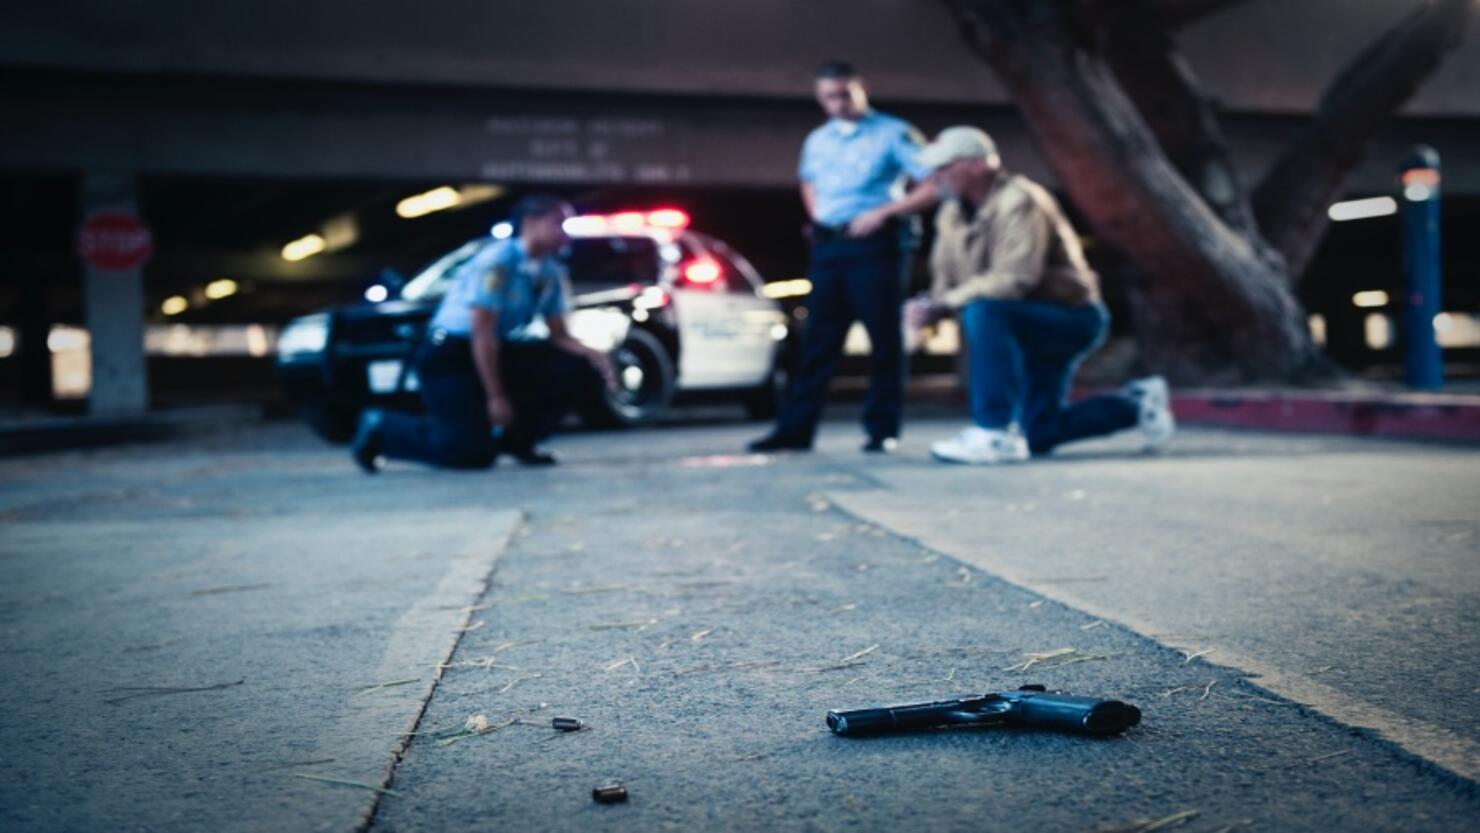 Police examining crime scene with gun on ground